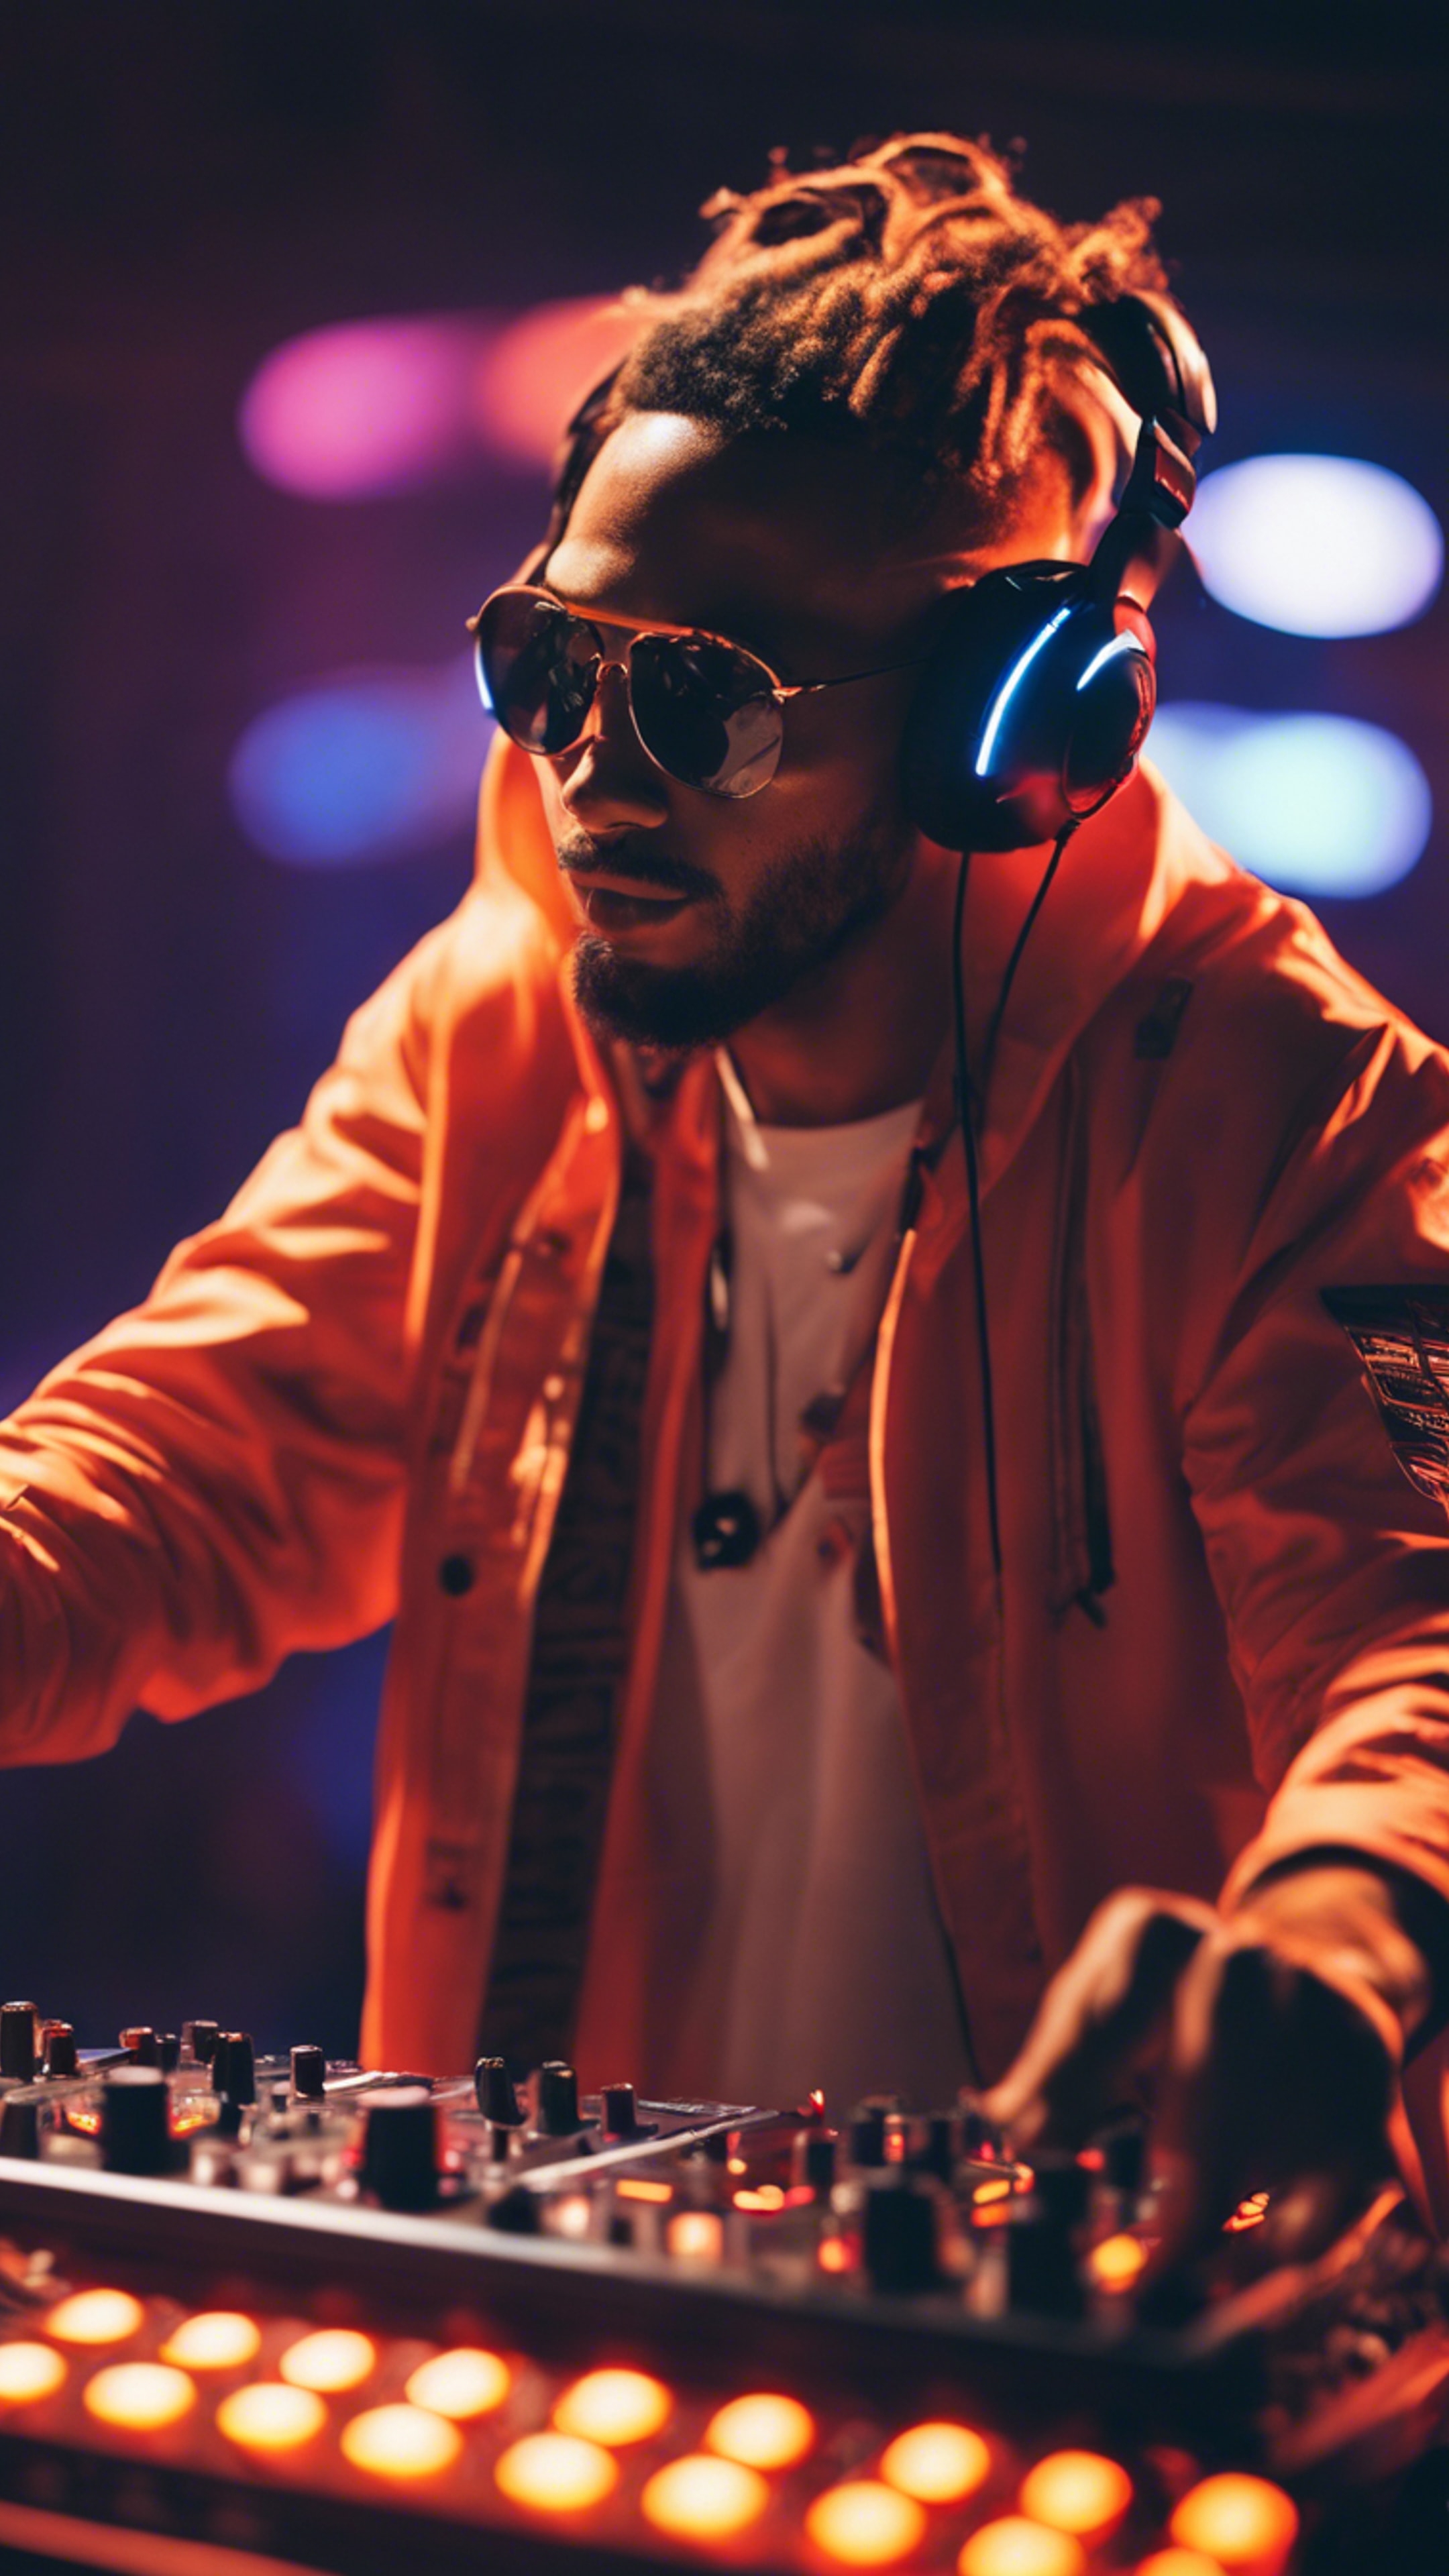 An energetic DJ at a music festival wearing neon orange headphones.壁紙[135547dc2eef4b3588bf]